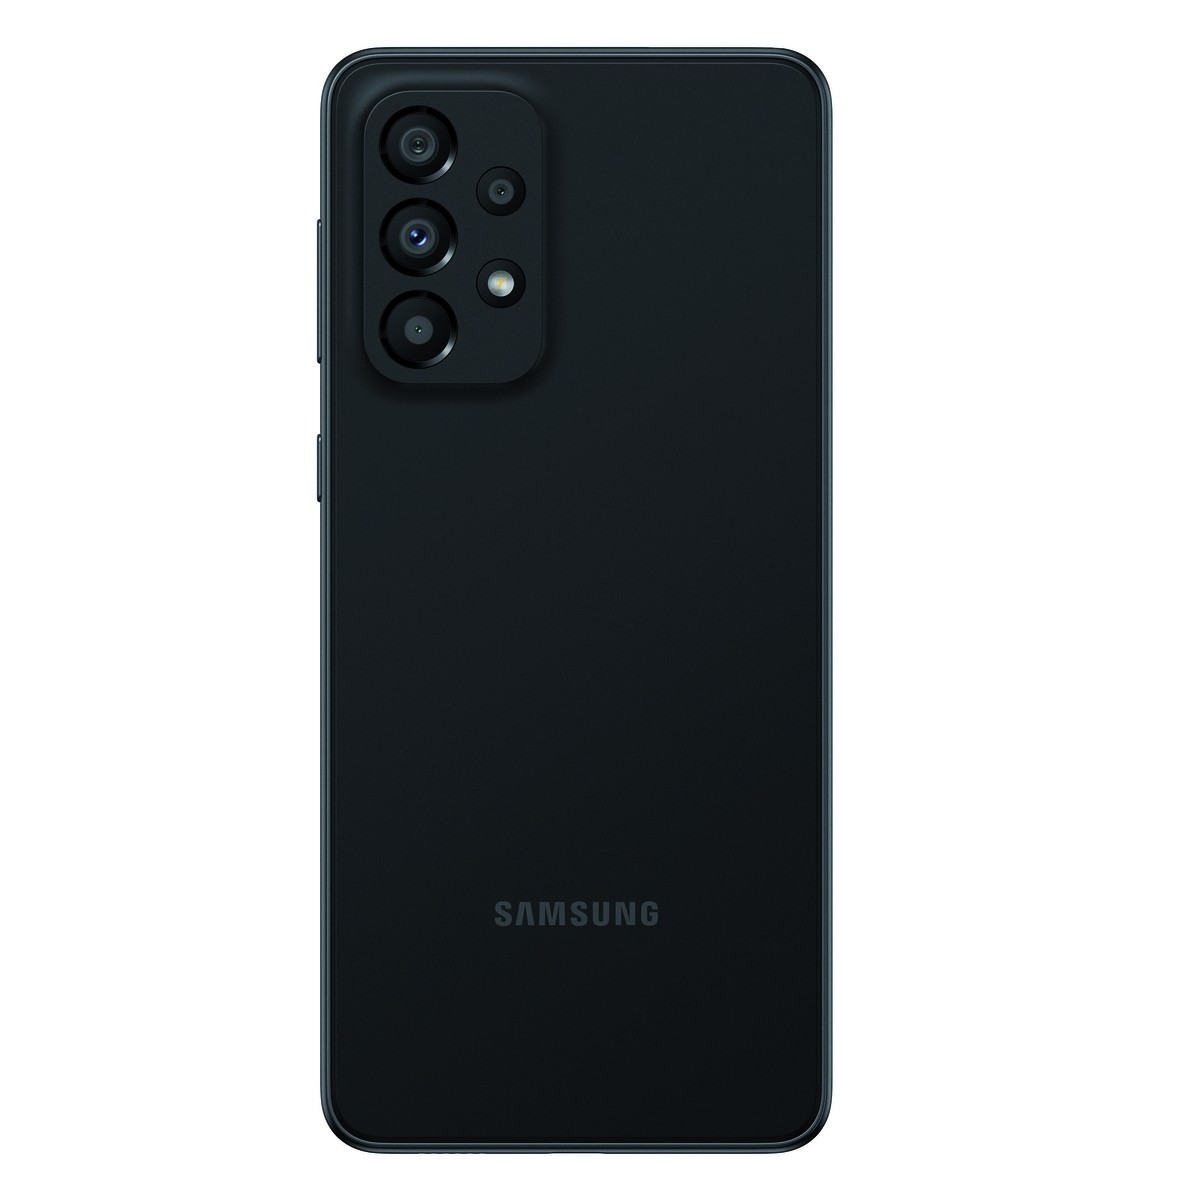 Samsung Galaxy A33 5G (MTN)